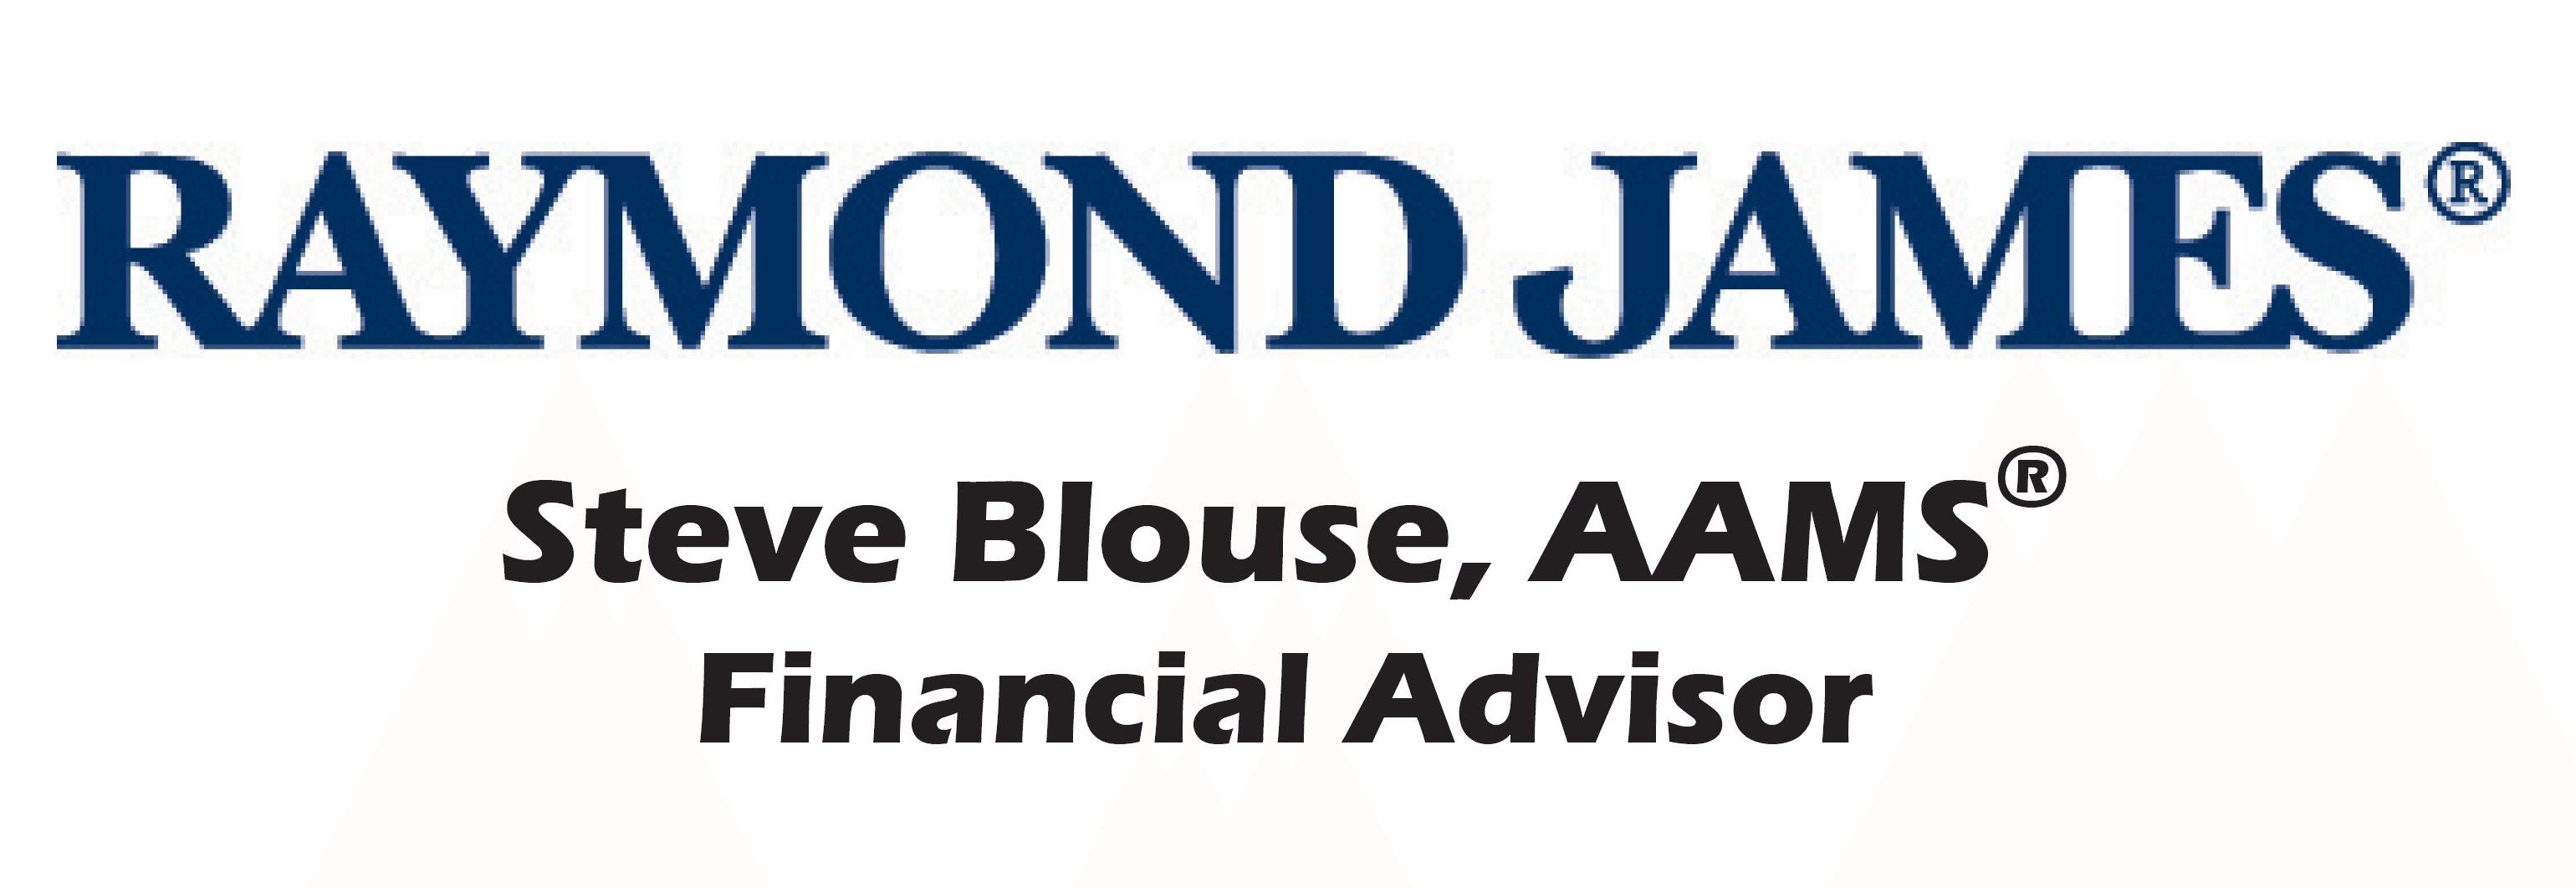 Steven Blouse, AAMS Financial Advisor / Raymond James